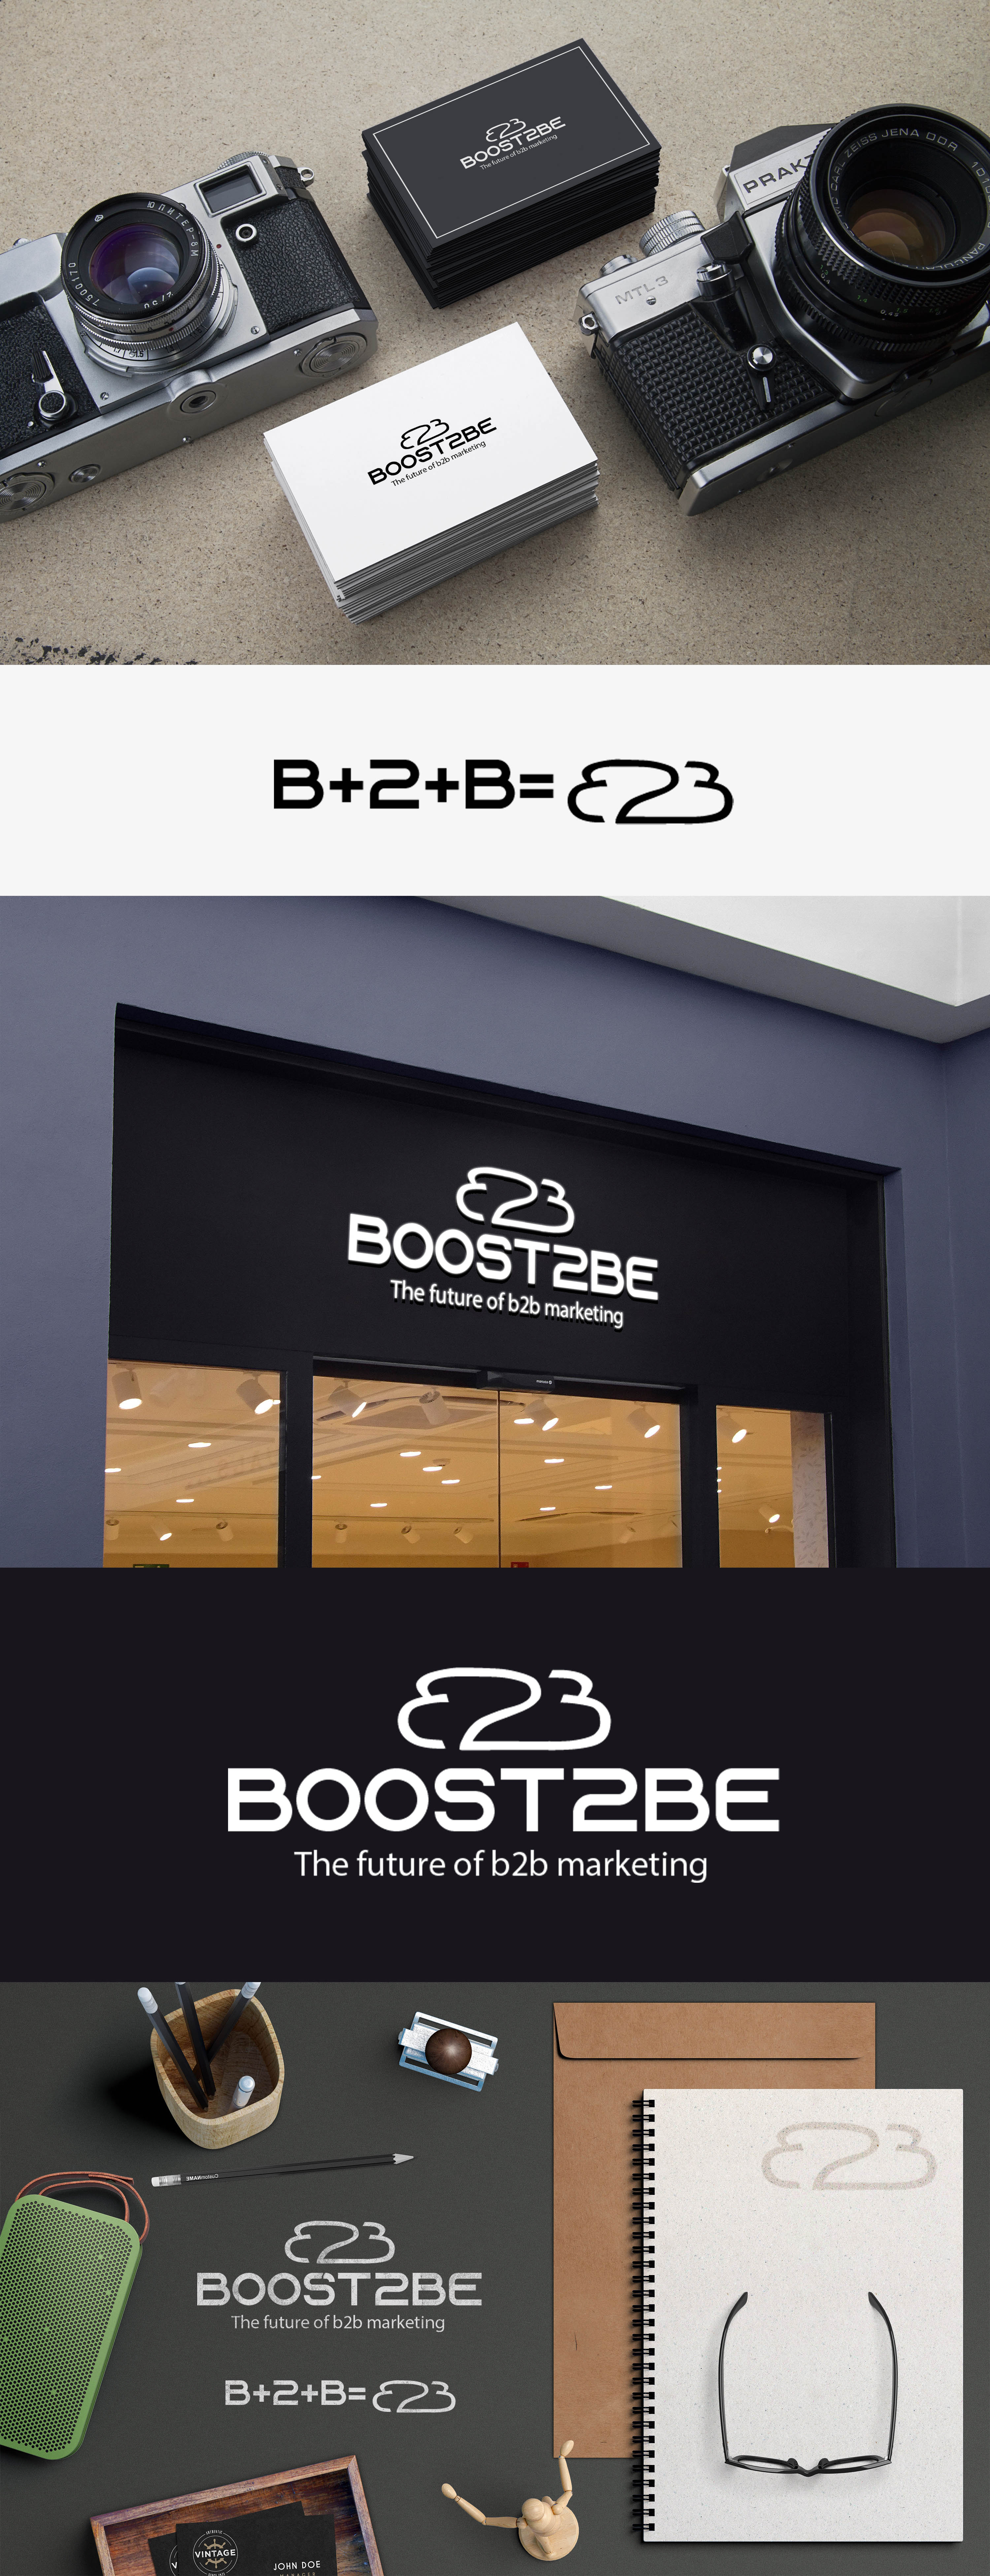 Logo boost2be 1